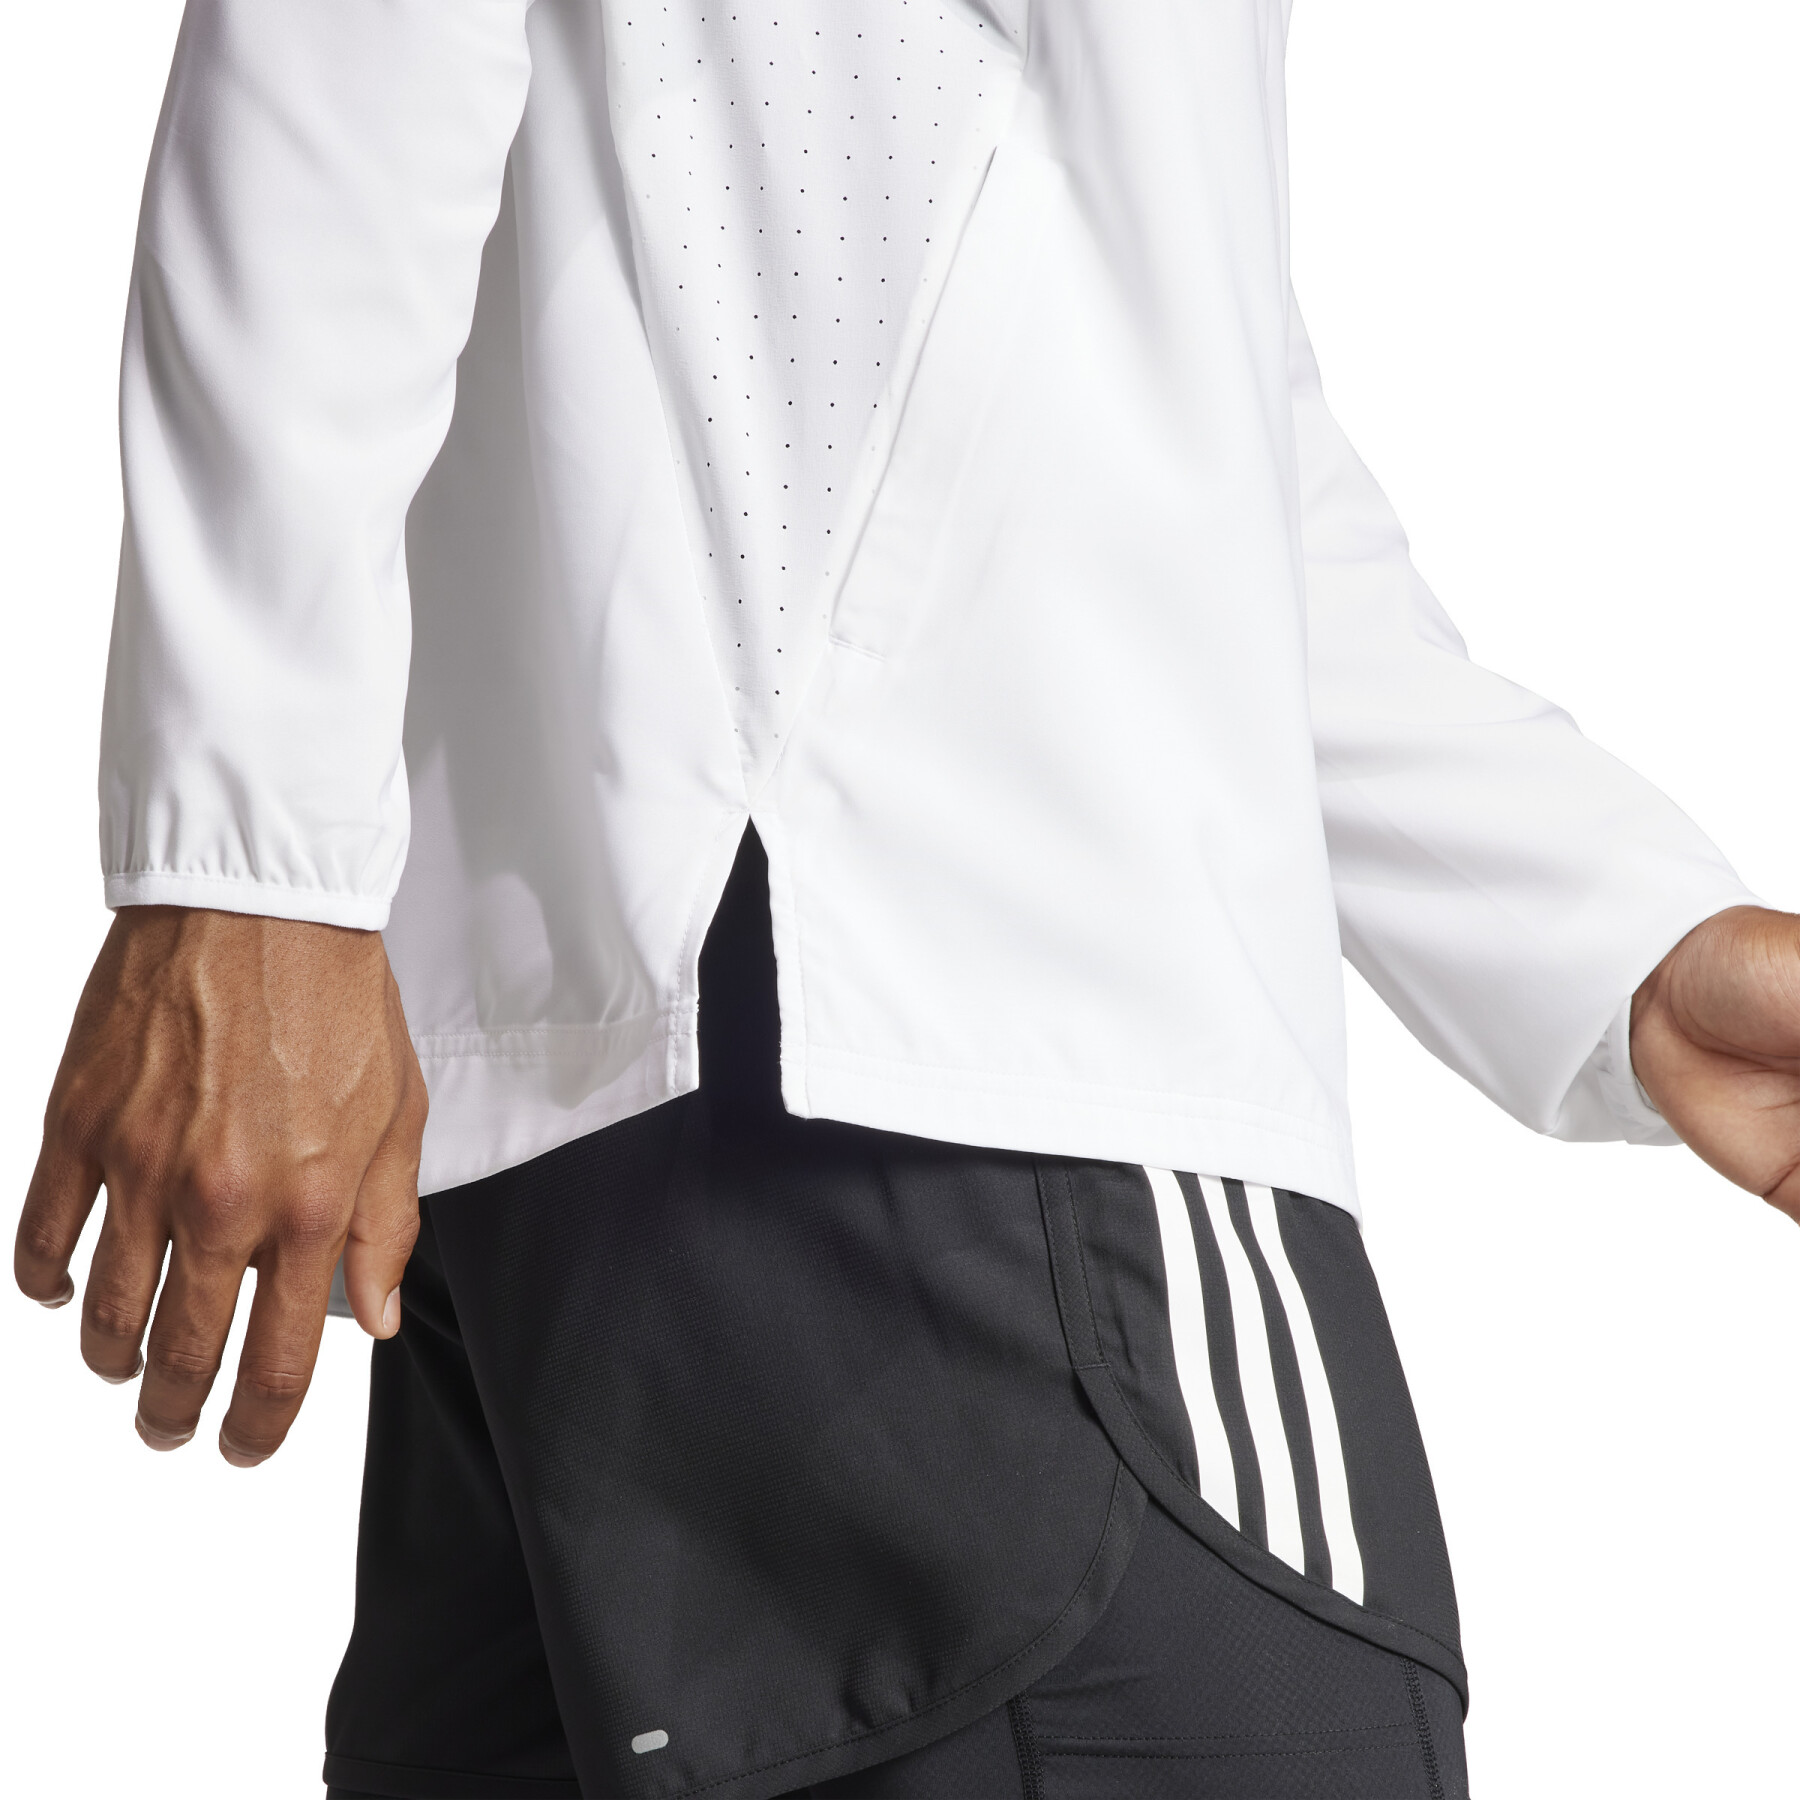 Sweat jacket adidas Adizero Essentials